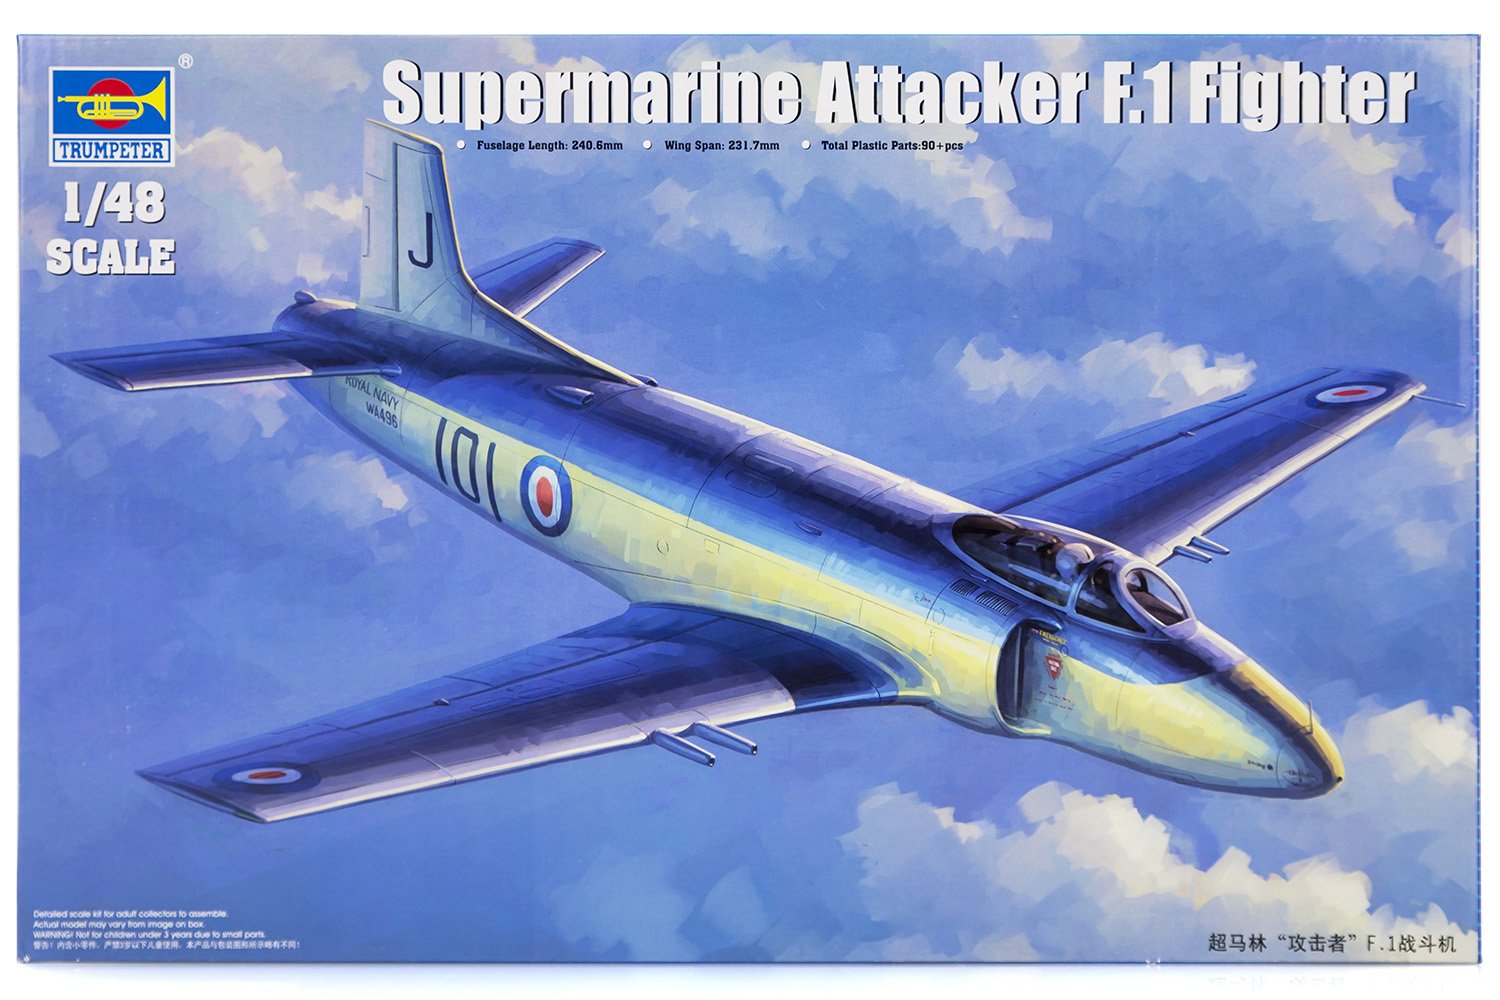 Supermarine Attacker F.1 